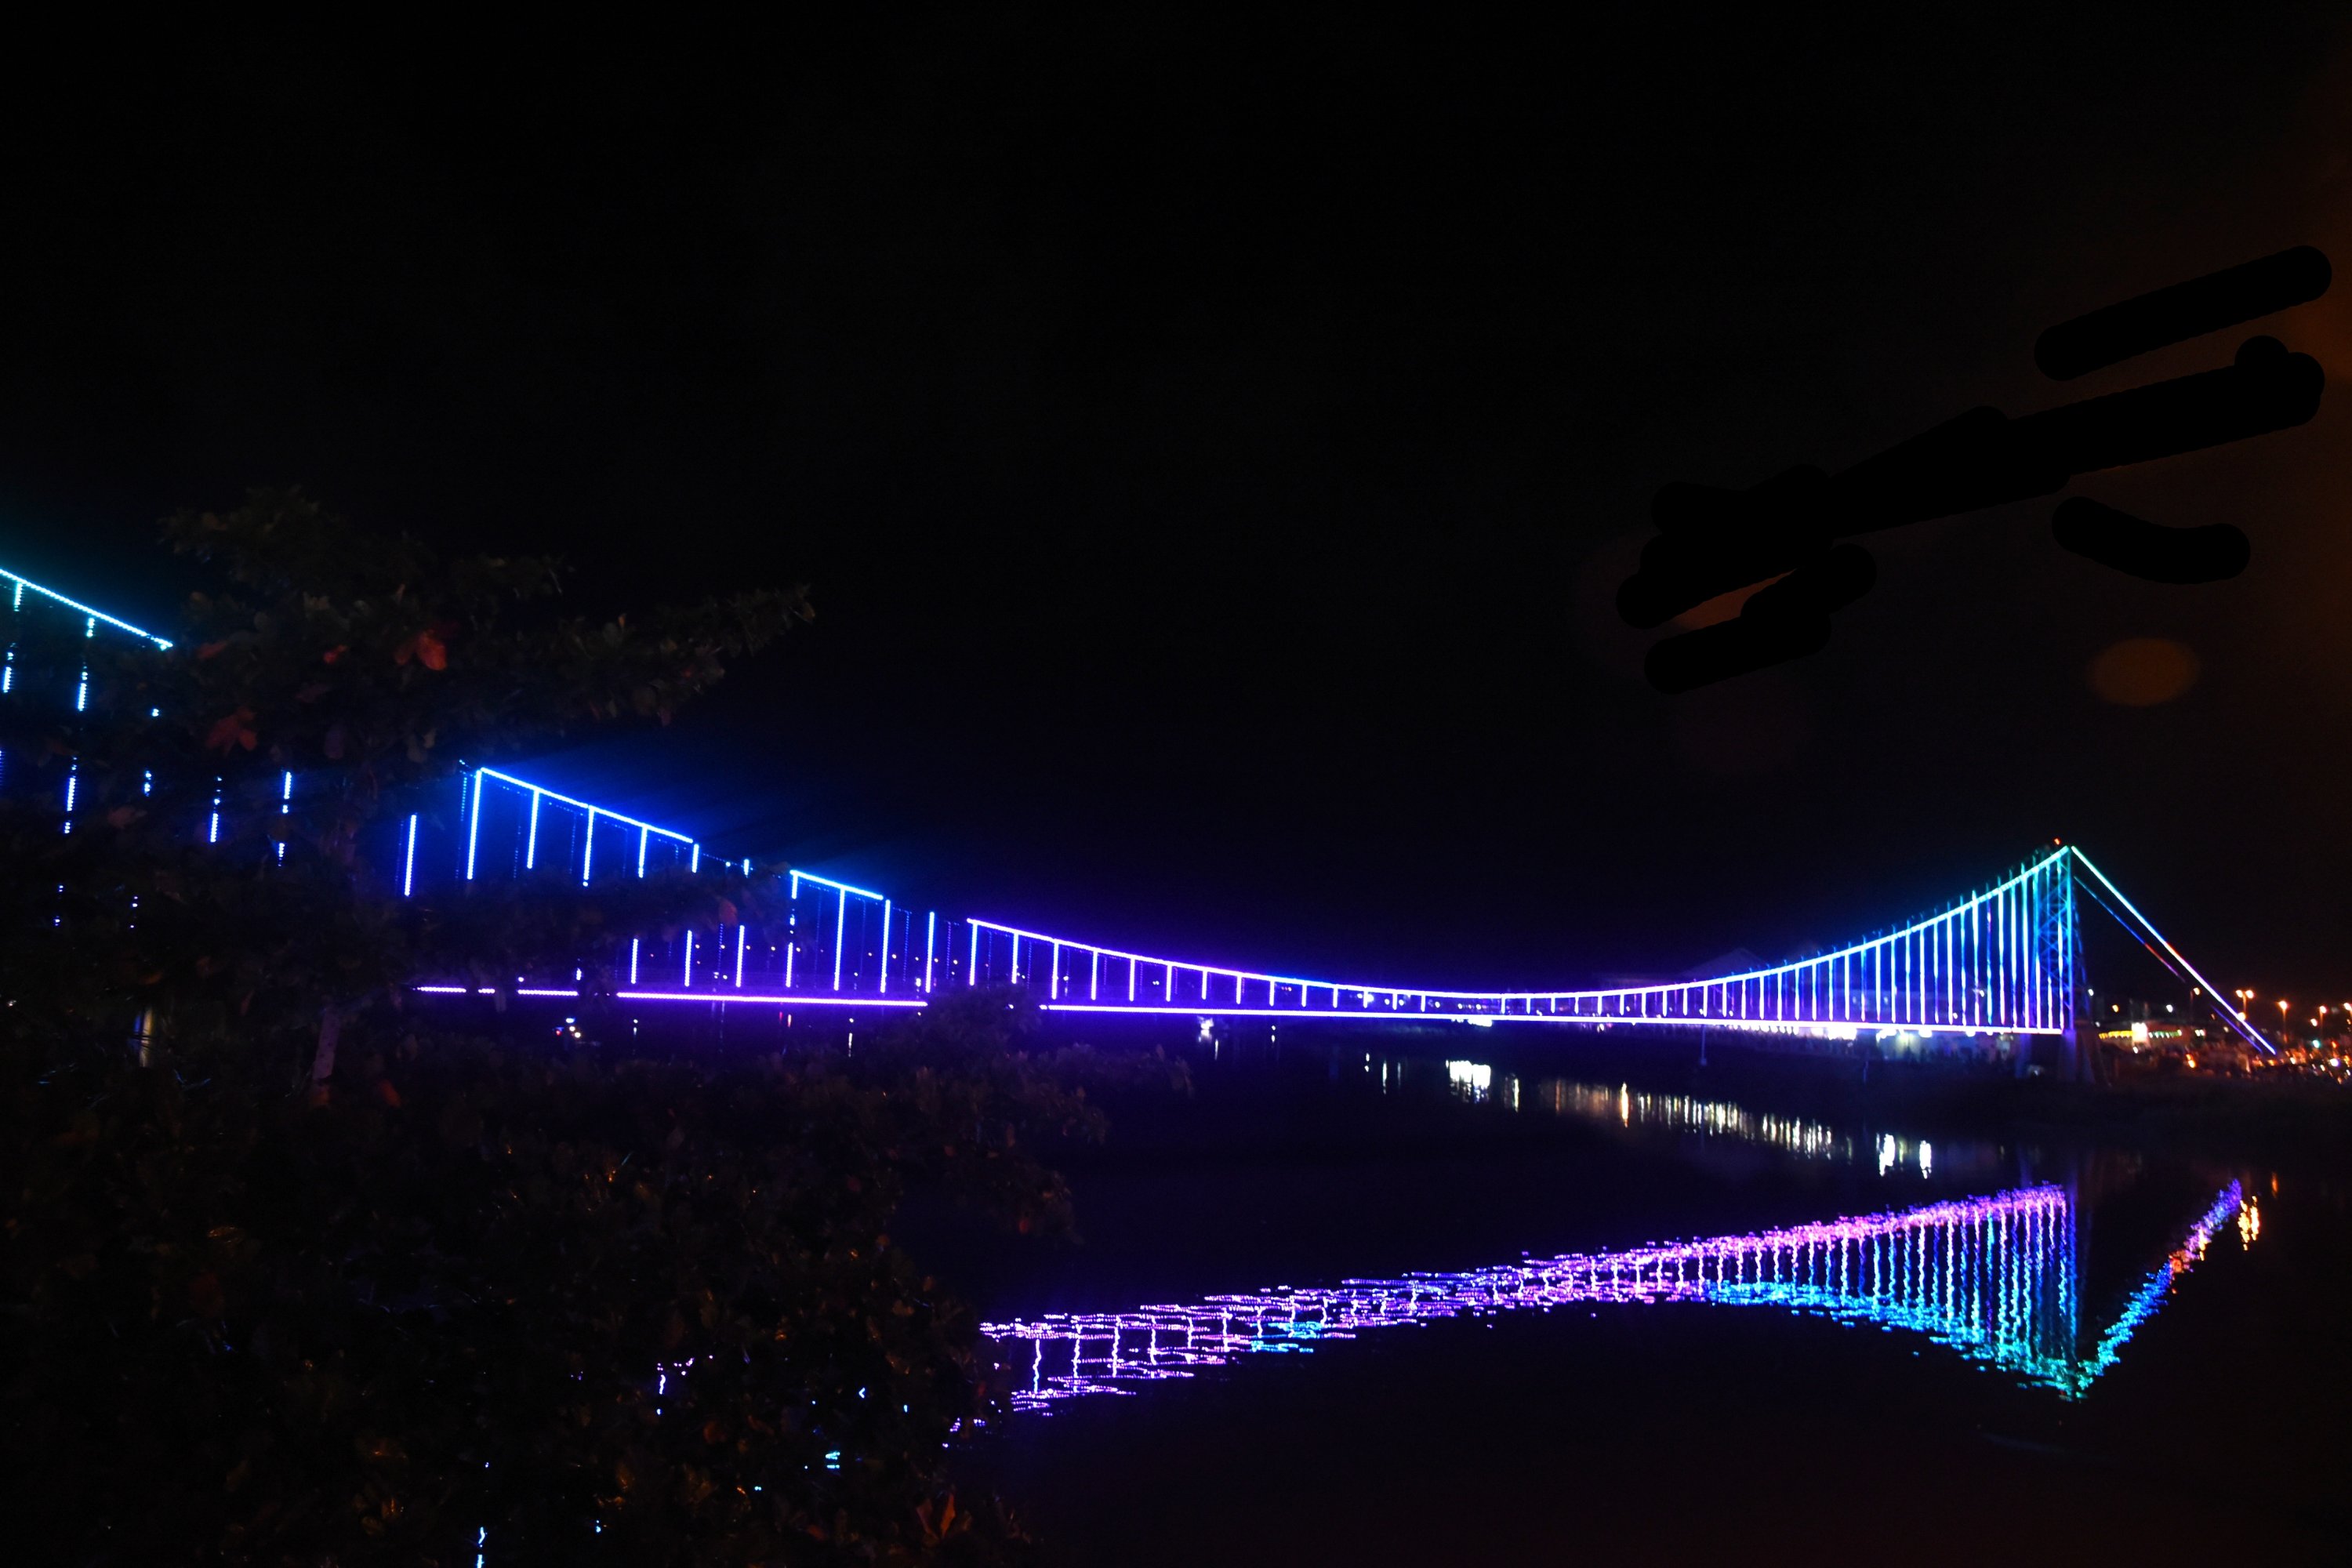 Tepi sungai antara Jembatan Darul Hana, Jembatan Gantung Satok akan ditingkatkan dengan tepi laut — Abg Jo